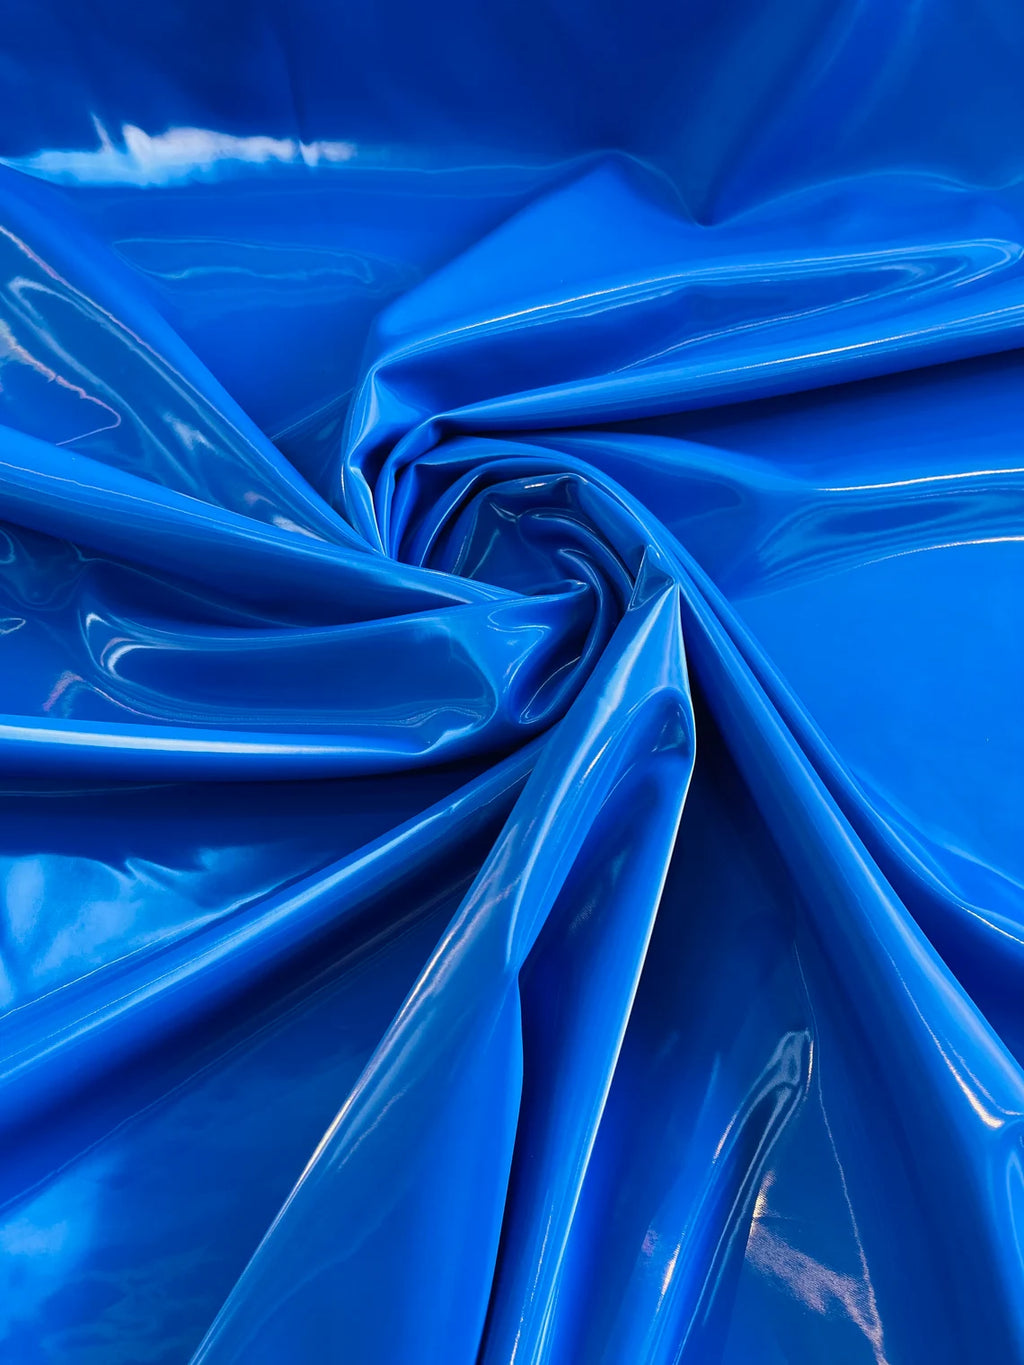 4-Way Stretch Fabric, Raised Honeycomb Print, Royal Blue – CosplayFabrics  International